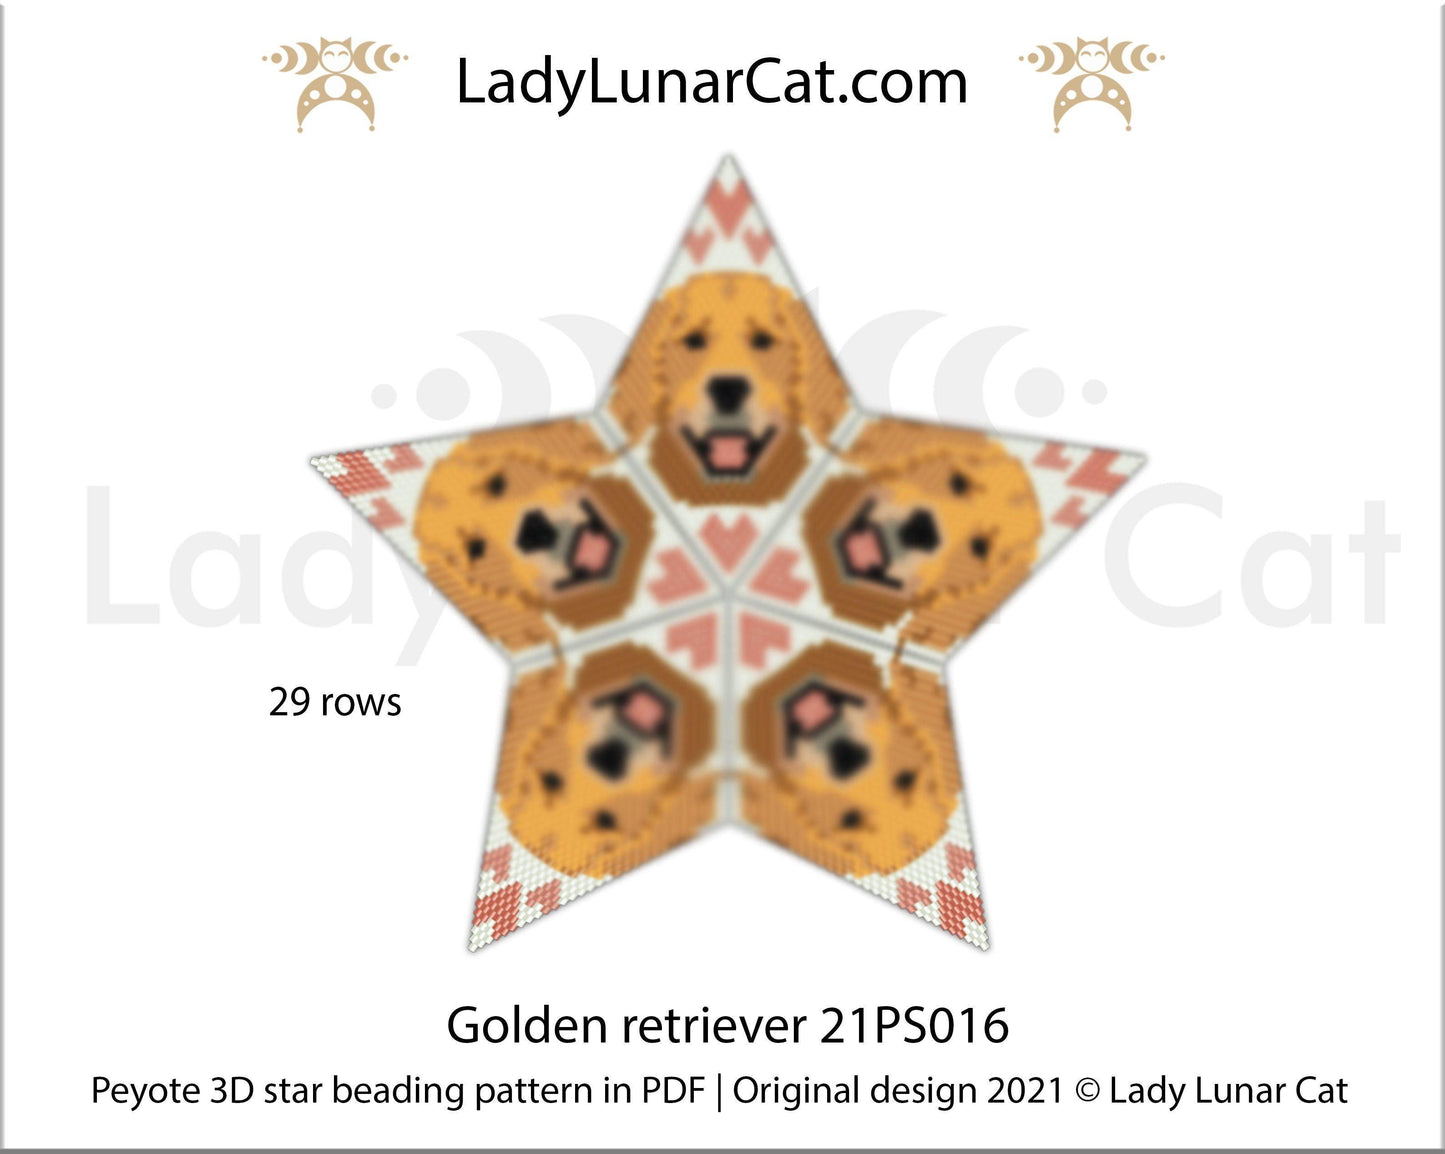 Copy of Beaded star pattern for beading - Watermelon mandala 21PS015 LadyLunarCat